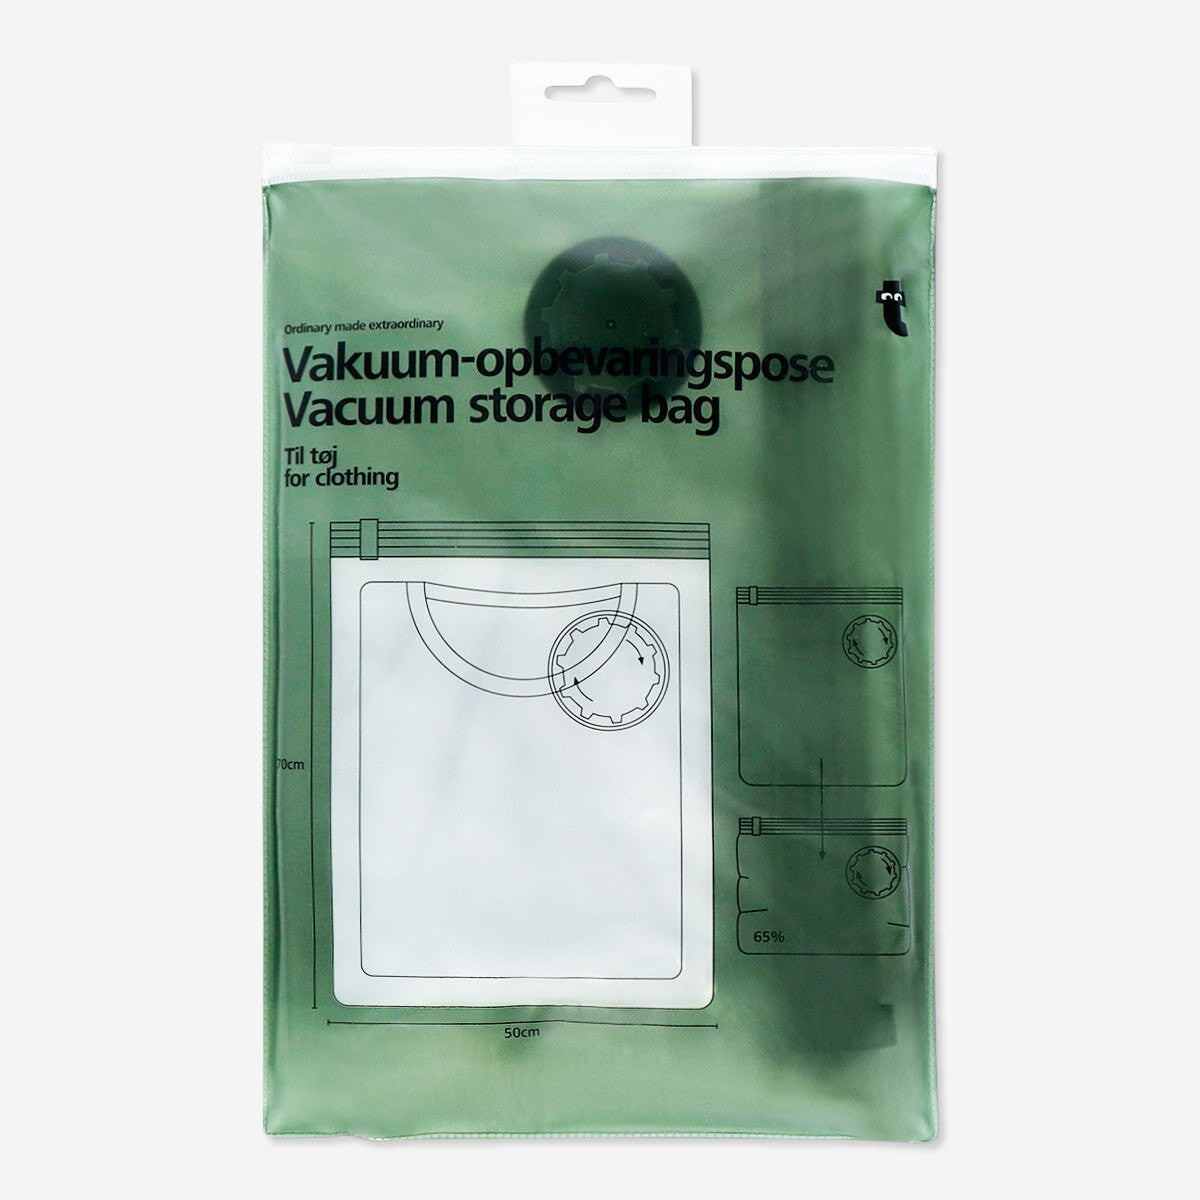 Vacuum storage bag Personal care Flying Tiger Copenhagen 